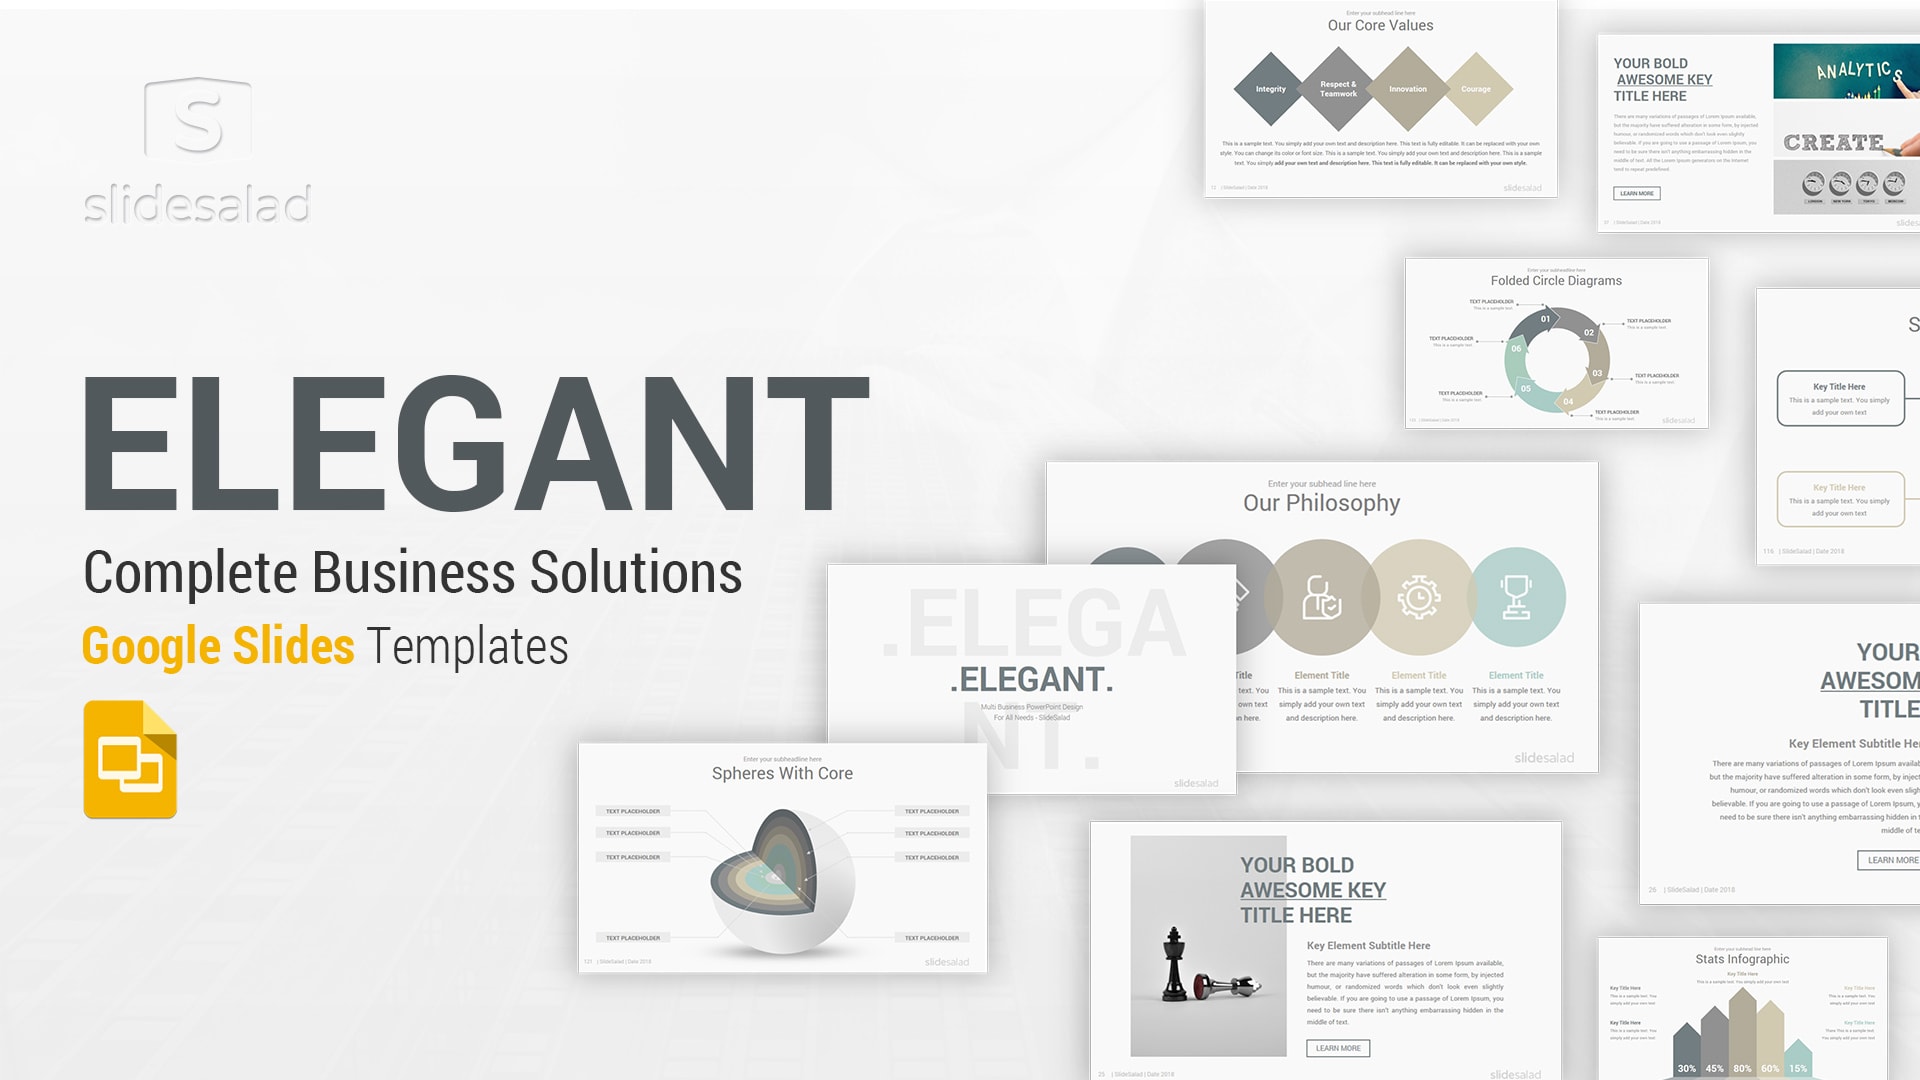 Elegant Google Slides Template Theme Designs - Clean, Impactful & Inspiring Presentation Templates Design